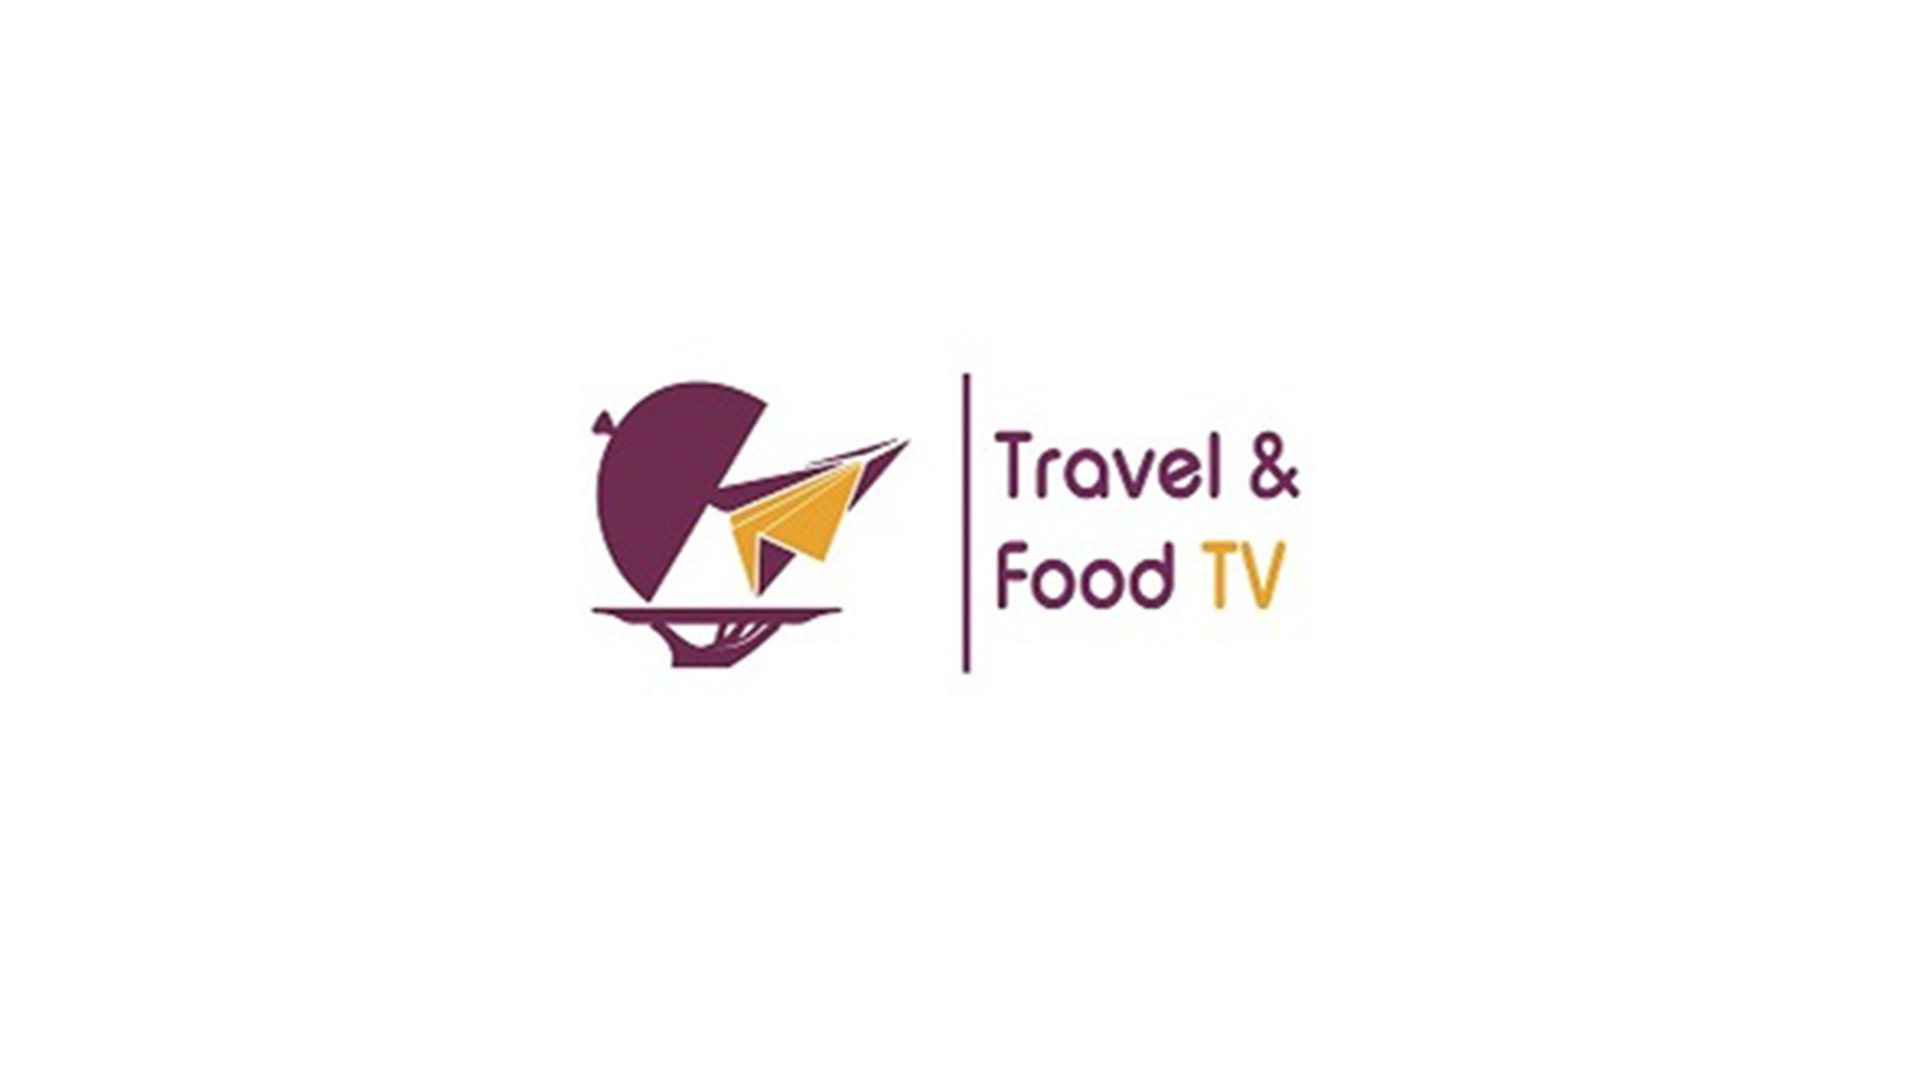 Travel & Food TV